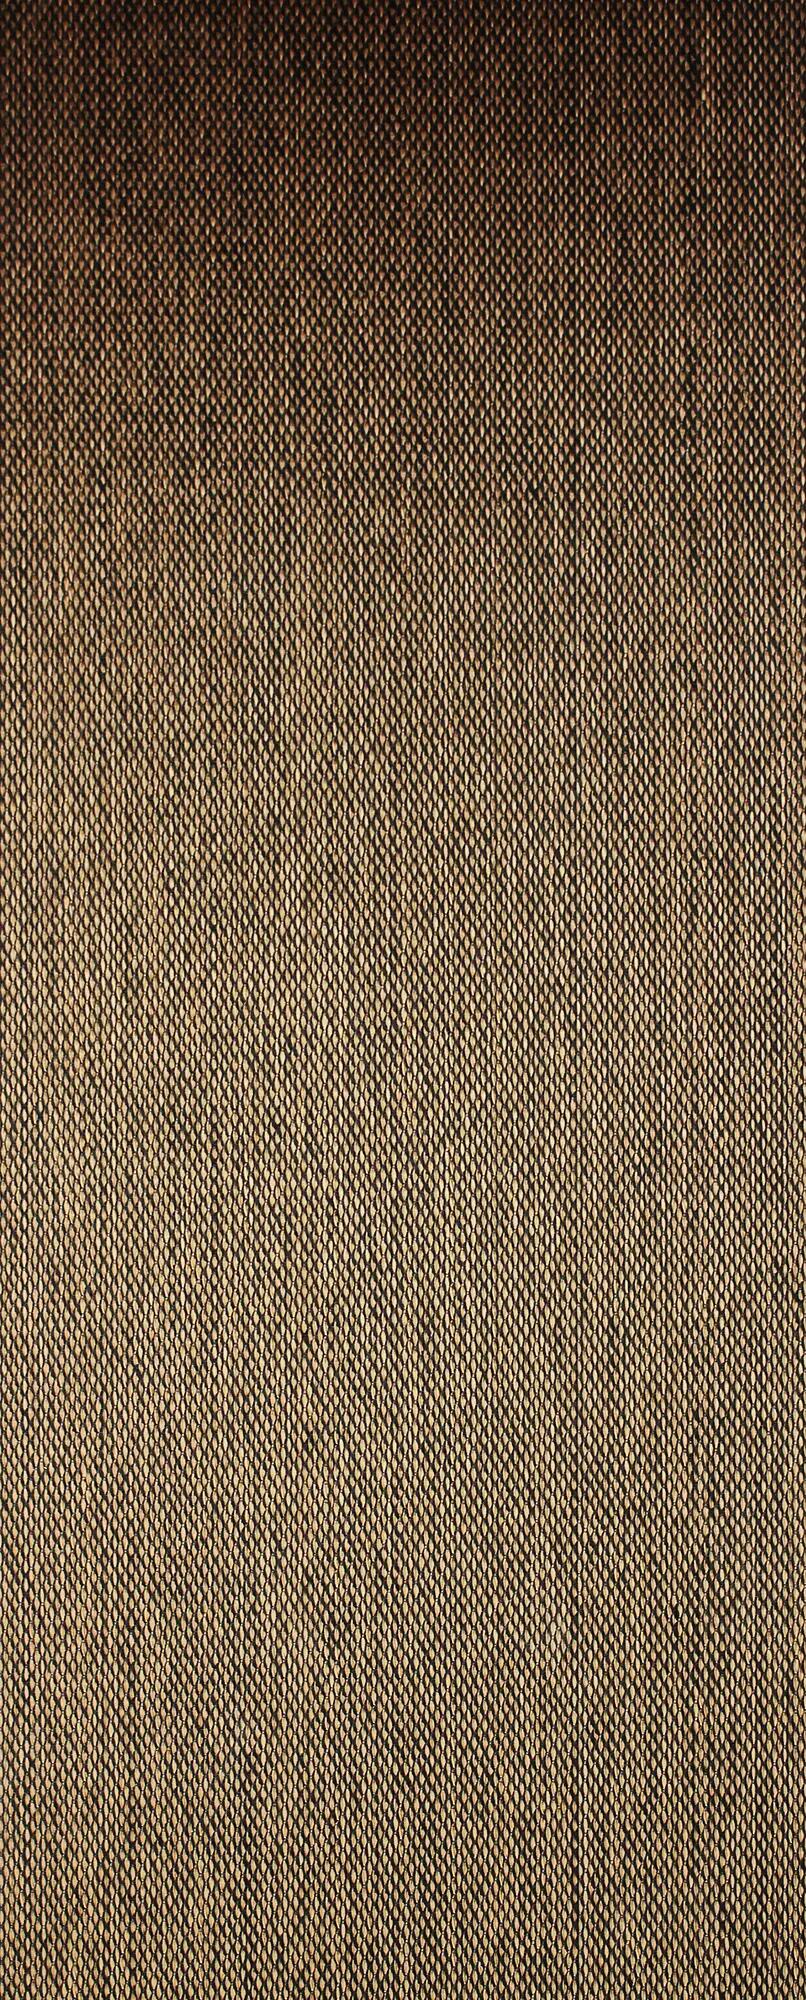 Alfombra pasillera exterior/interior pvc teplon brc marrón bronce 50x150cm